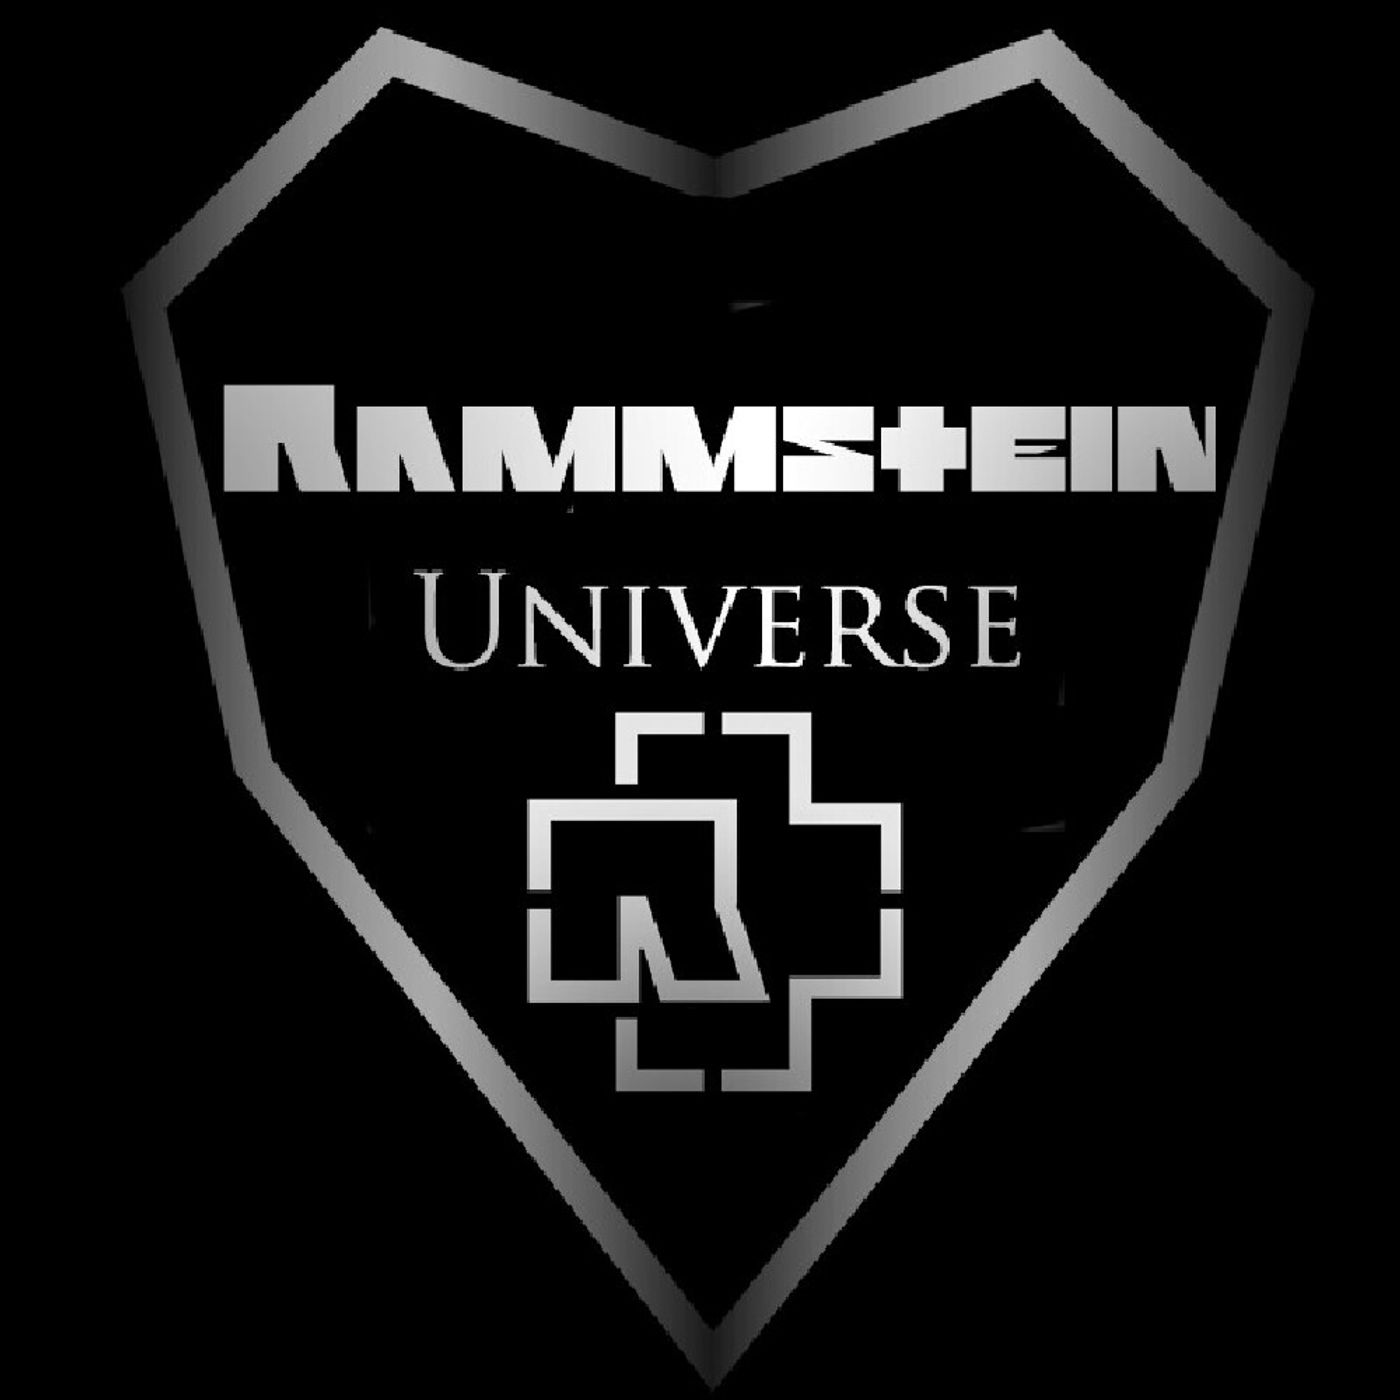 Rammstein Extended Version